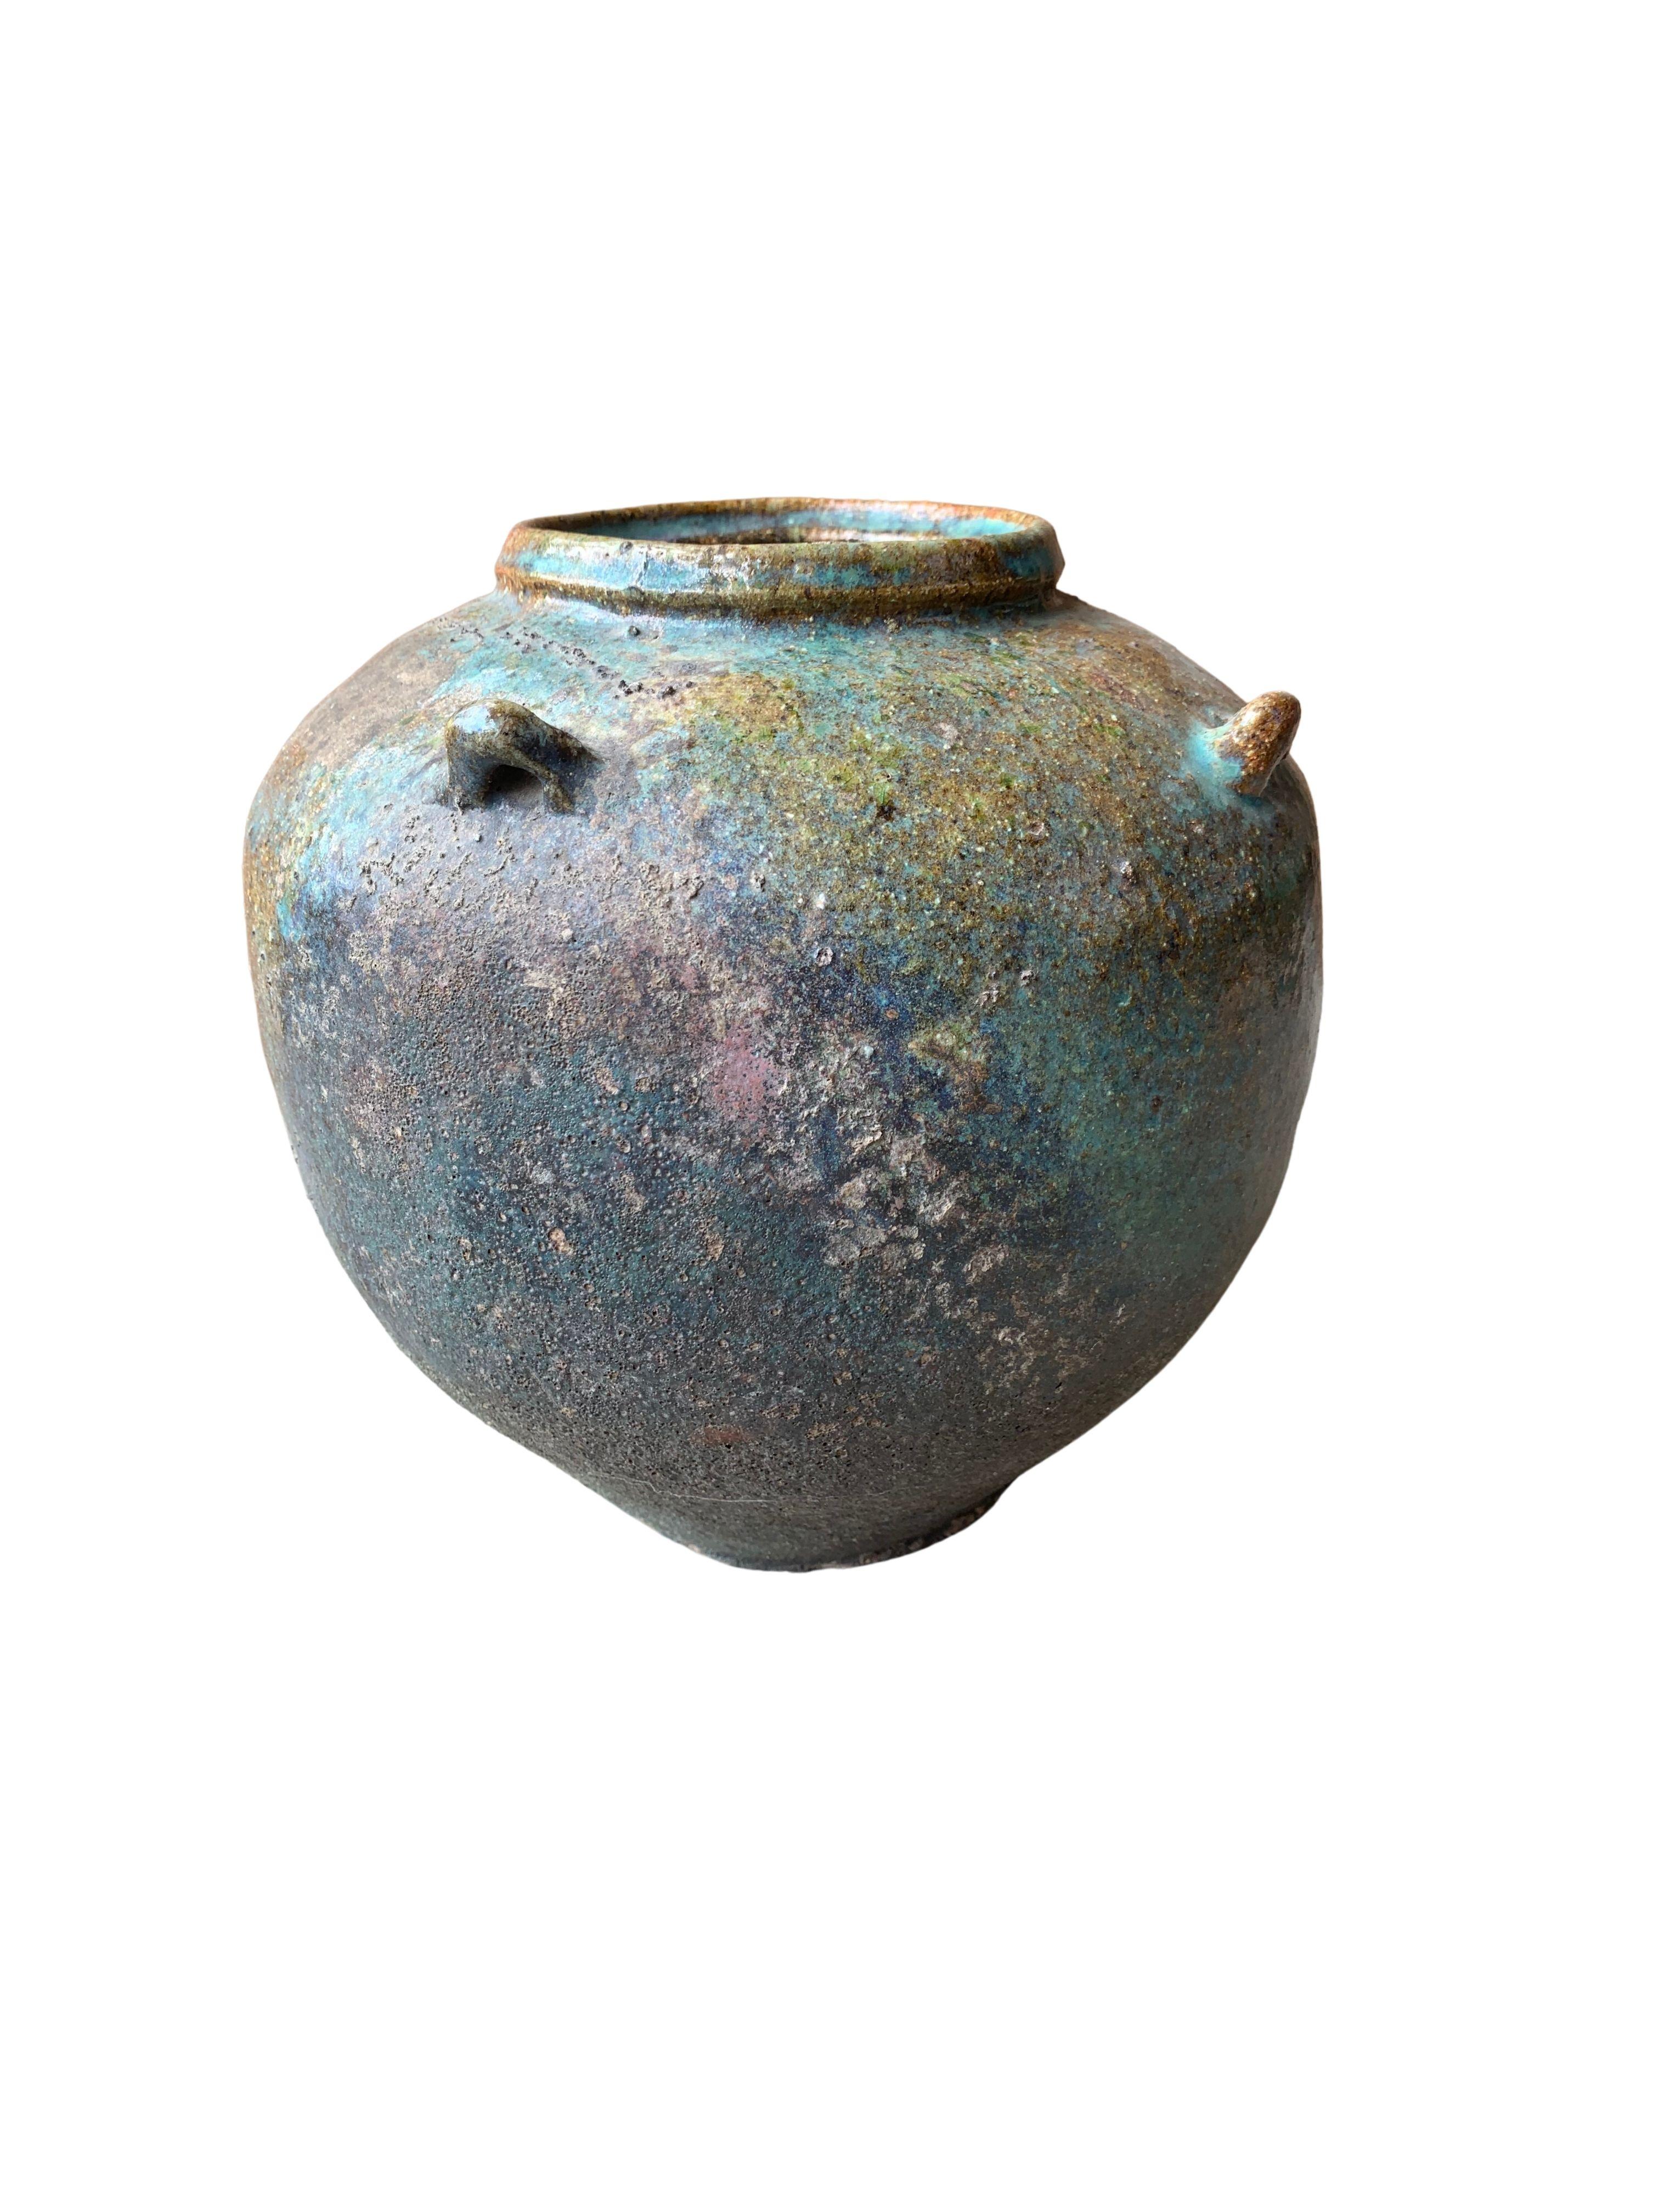 Qing Chinese Green / Turquoise Glazed Ceramic Kitchen Jar / Planter, c. 1950